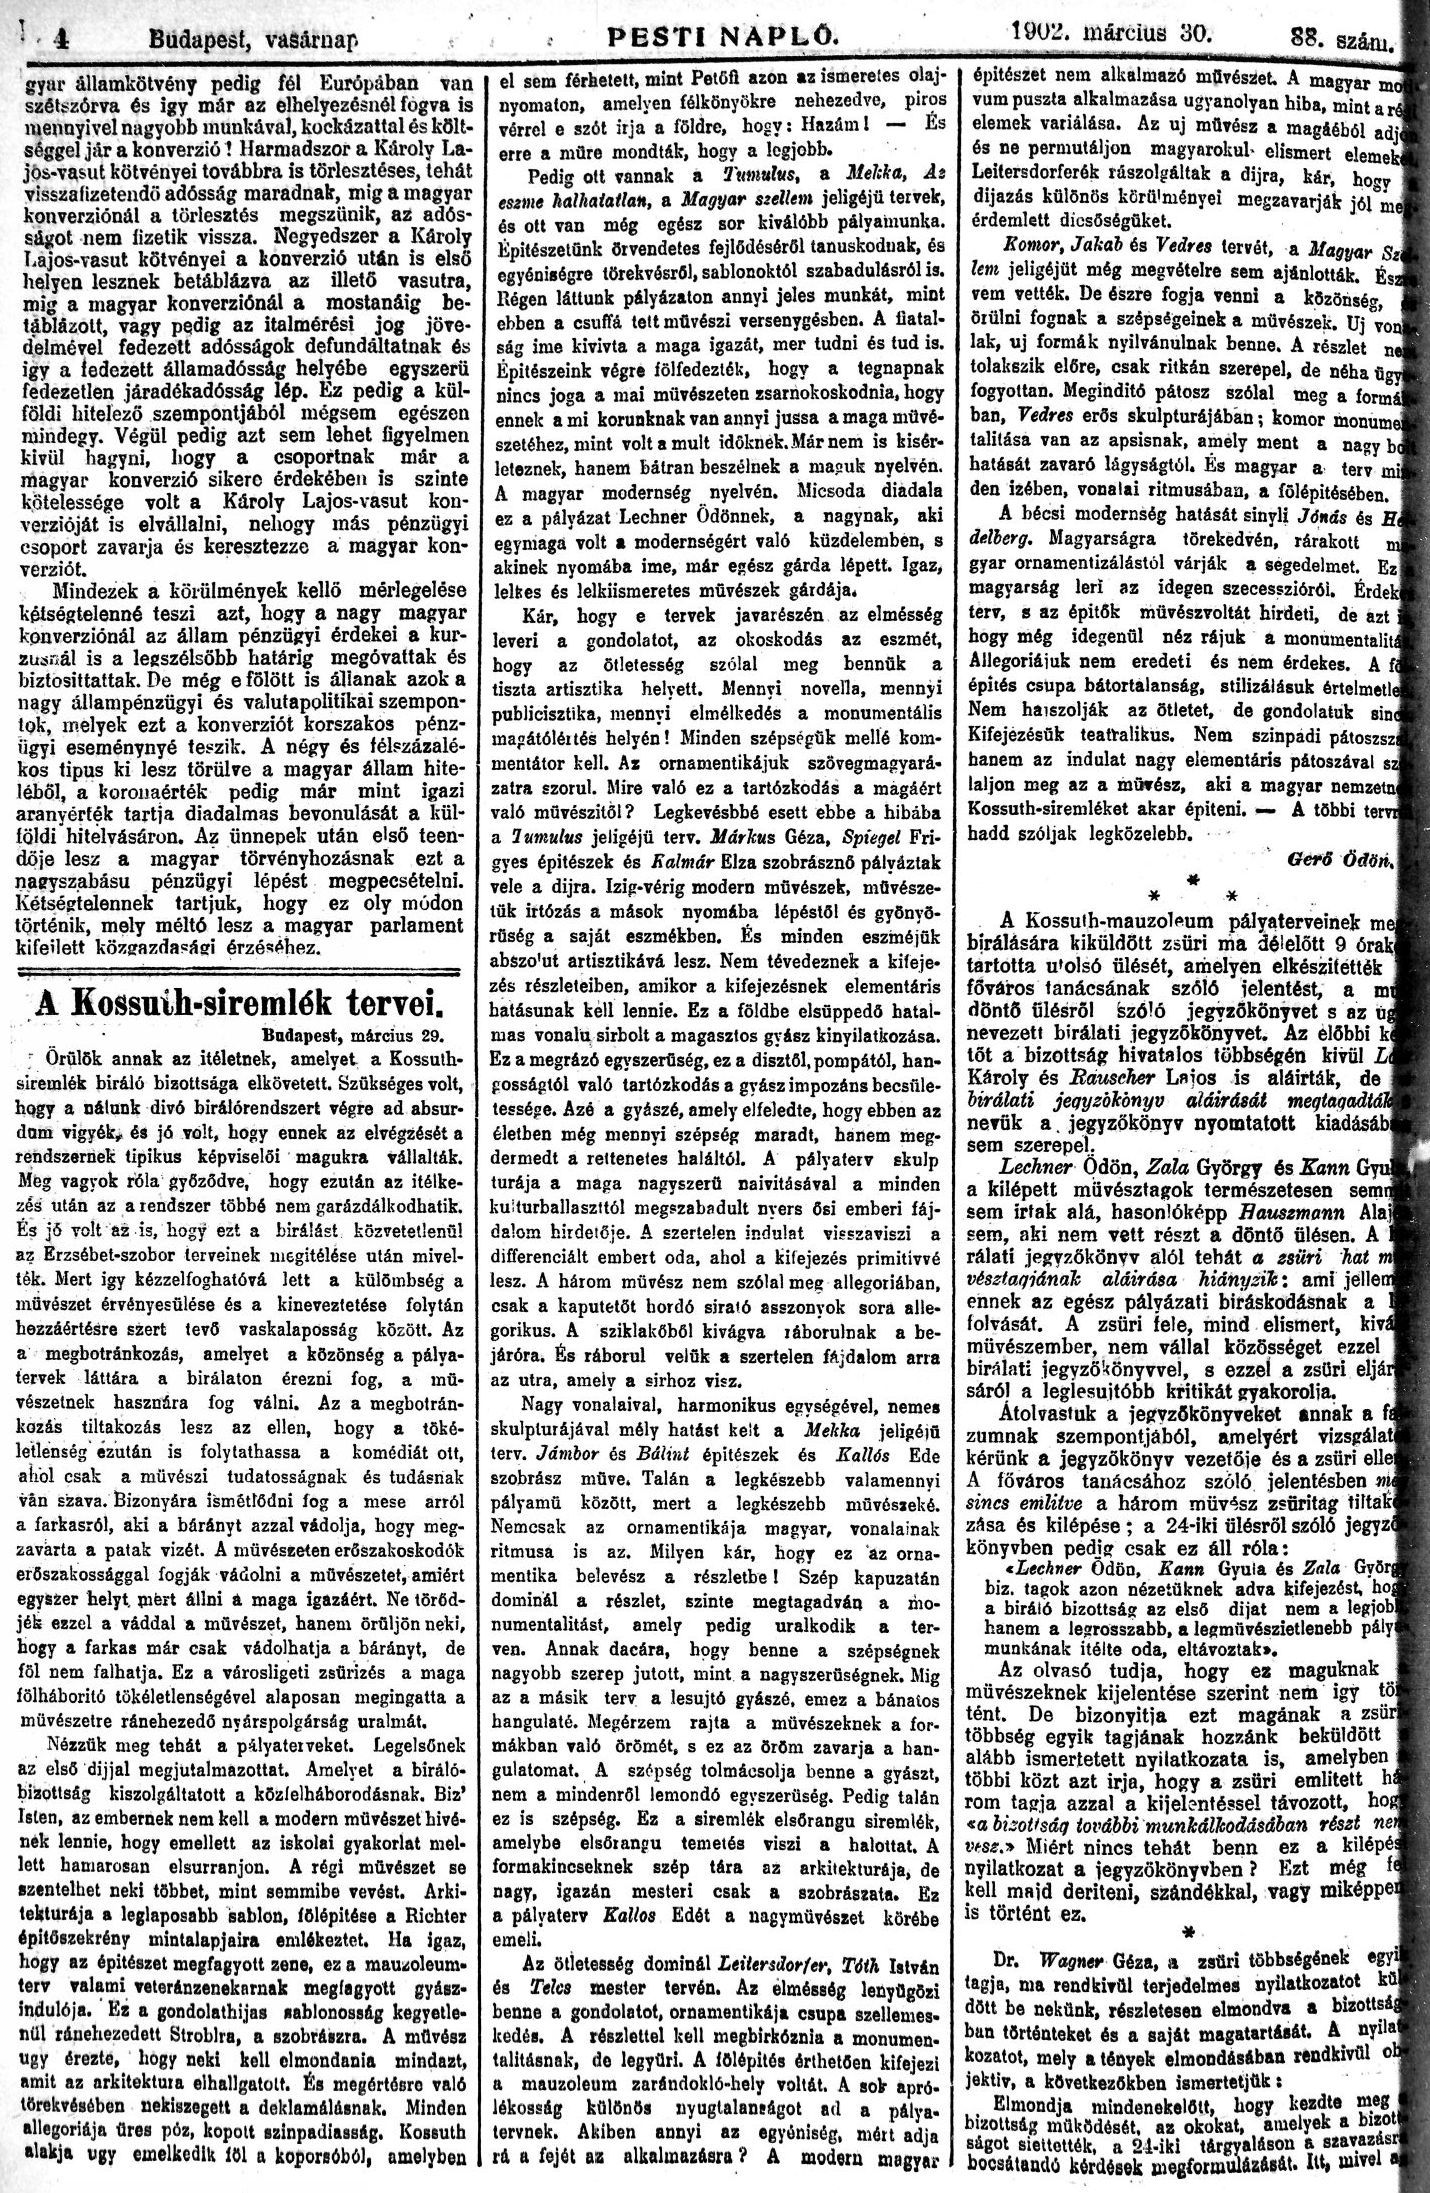 003_Pesti Napló, 1902. III. 30. 4. p.